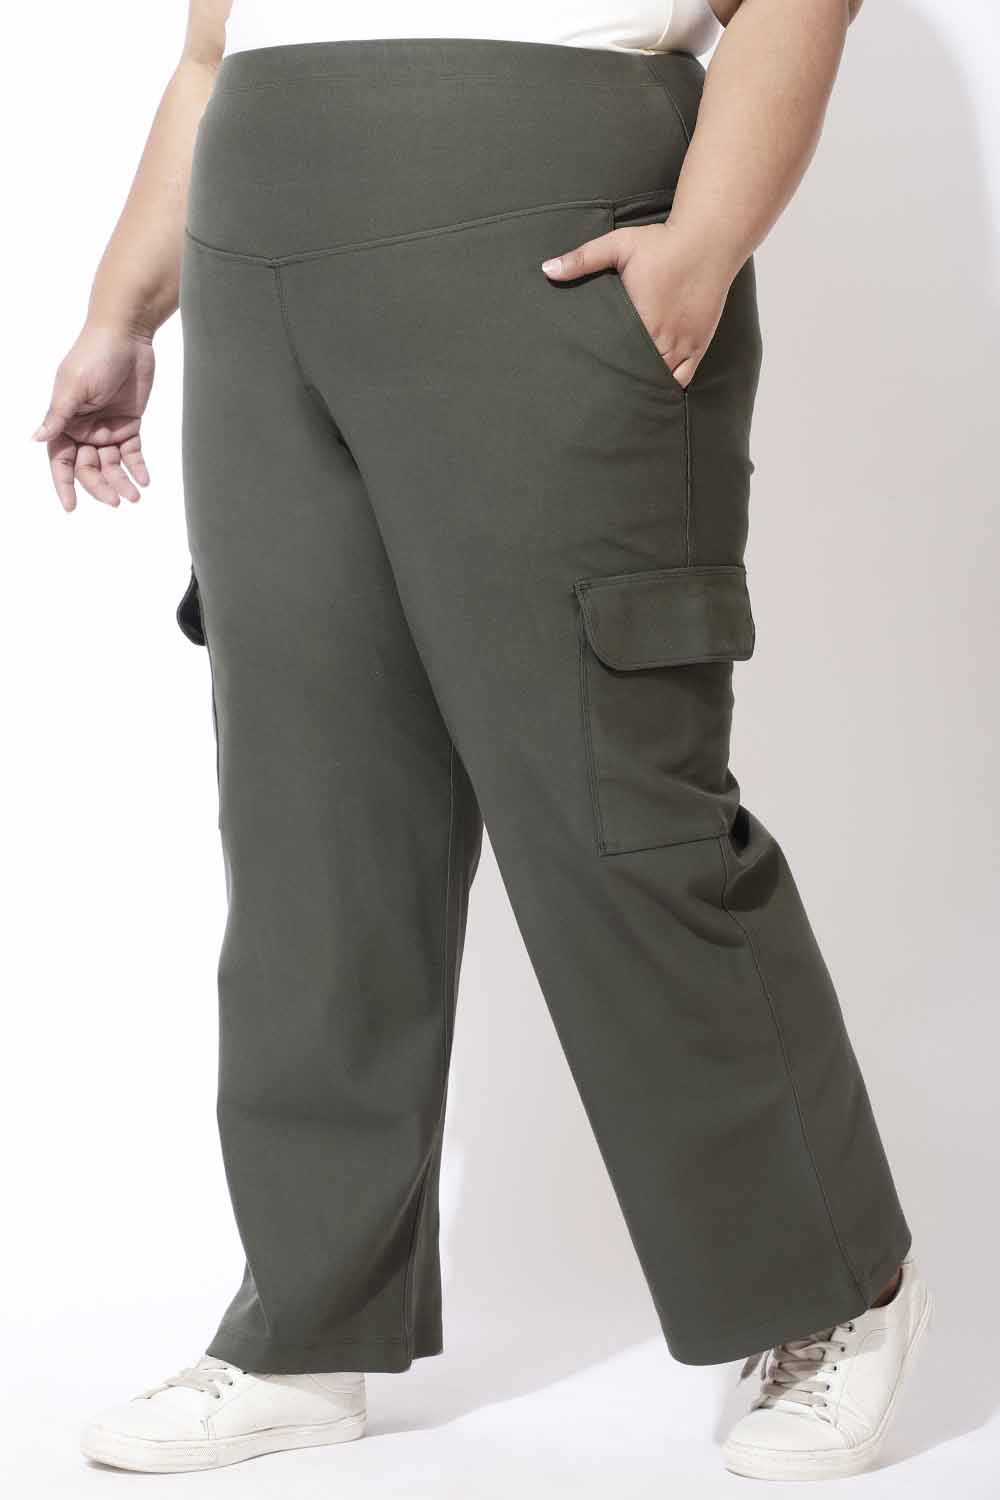 Olive Tummy Shaper Cargo Pants for Women